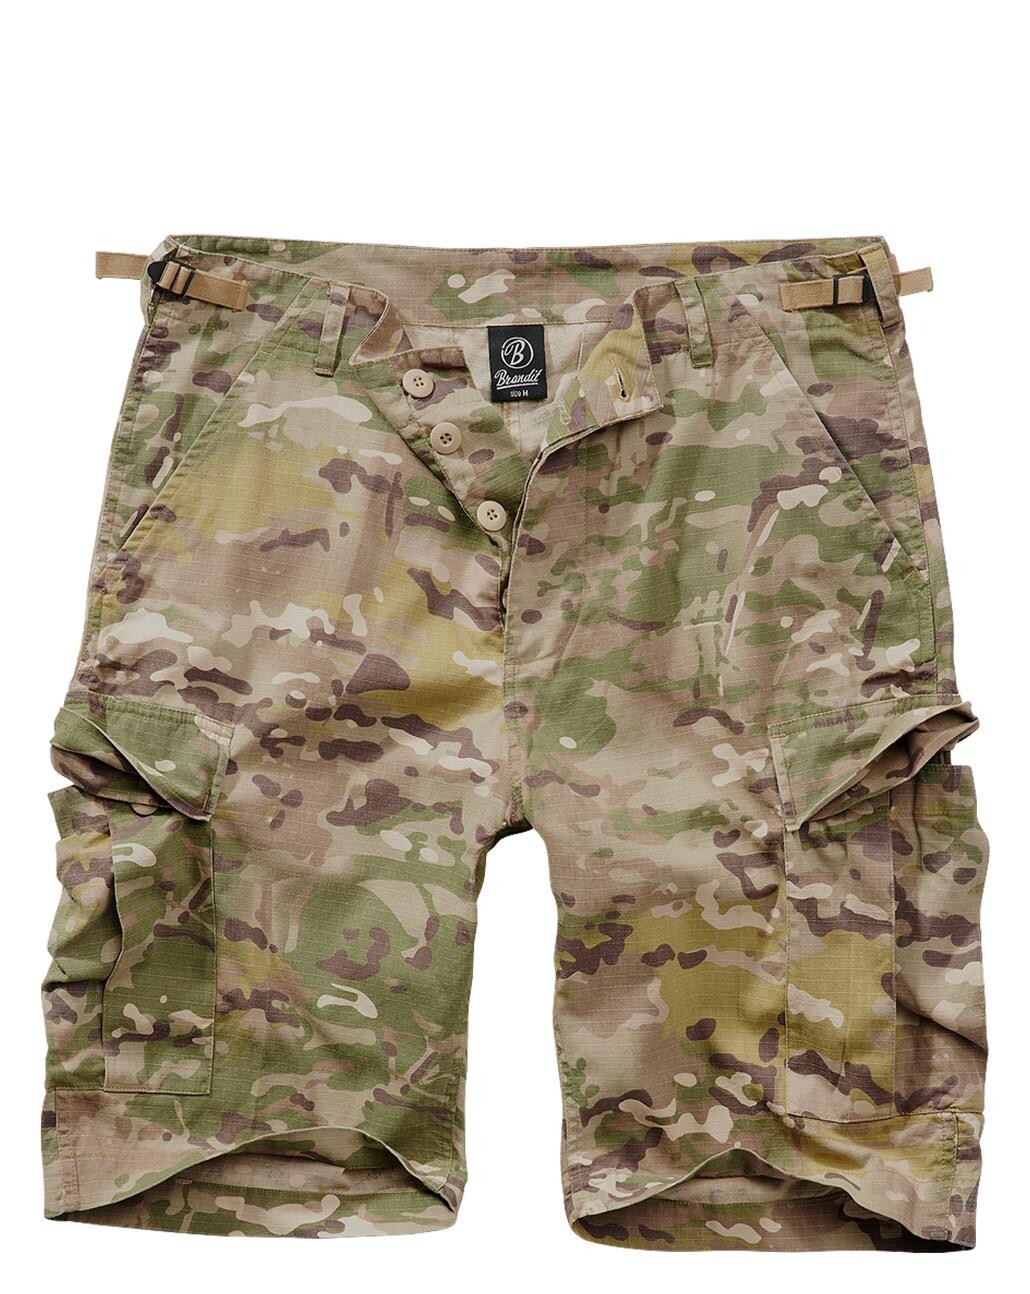 Brandit BDU Ripstop Shorts (Tactical Camo, 7XL)